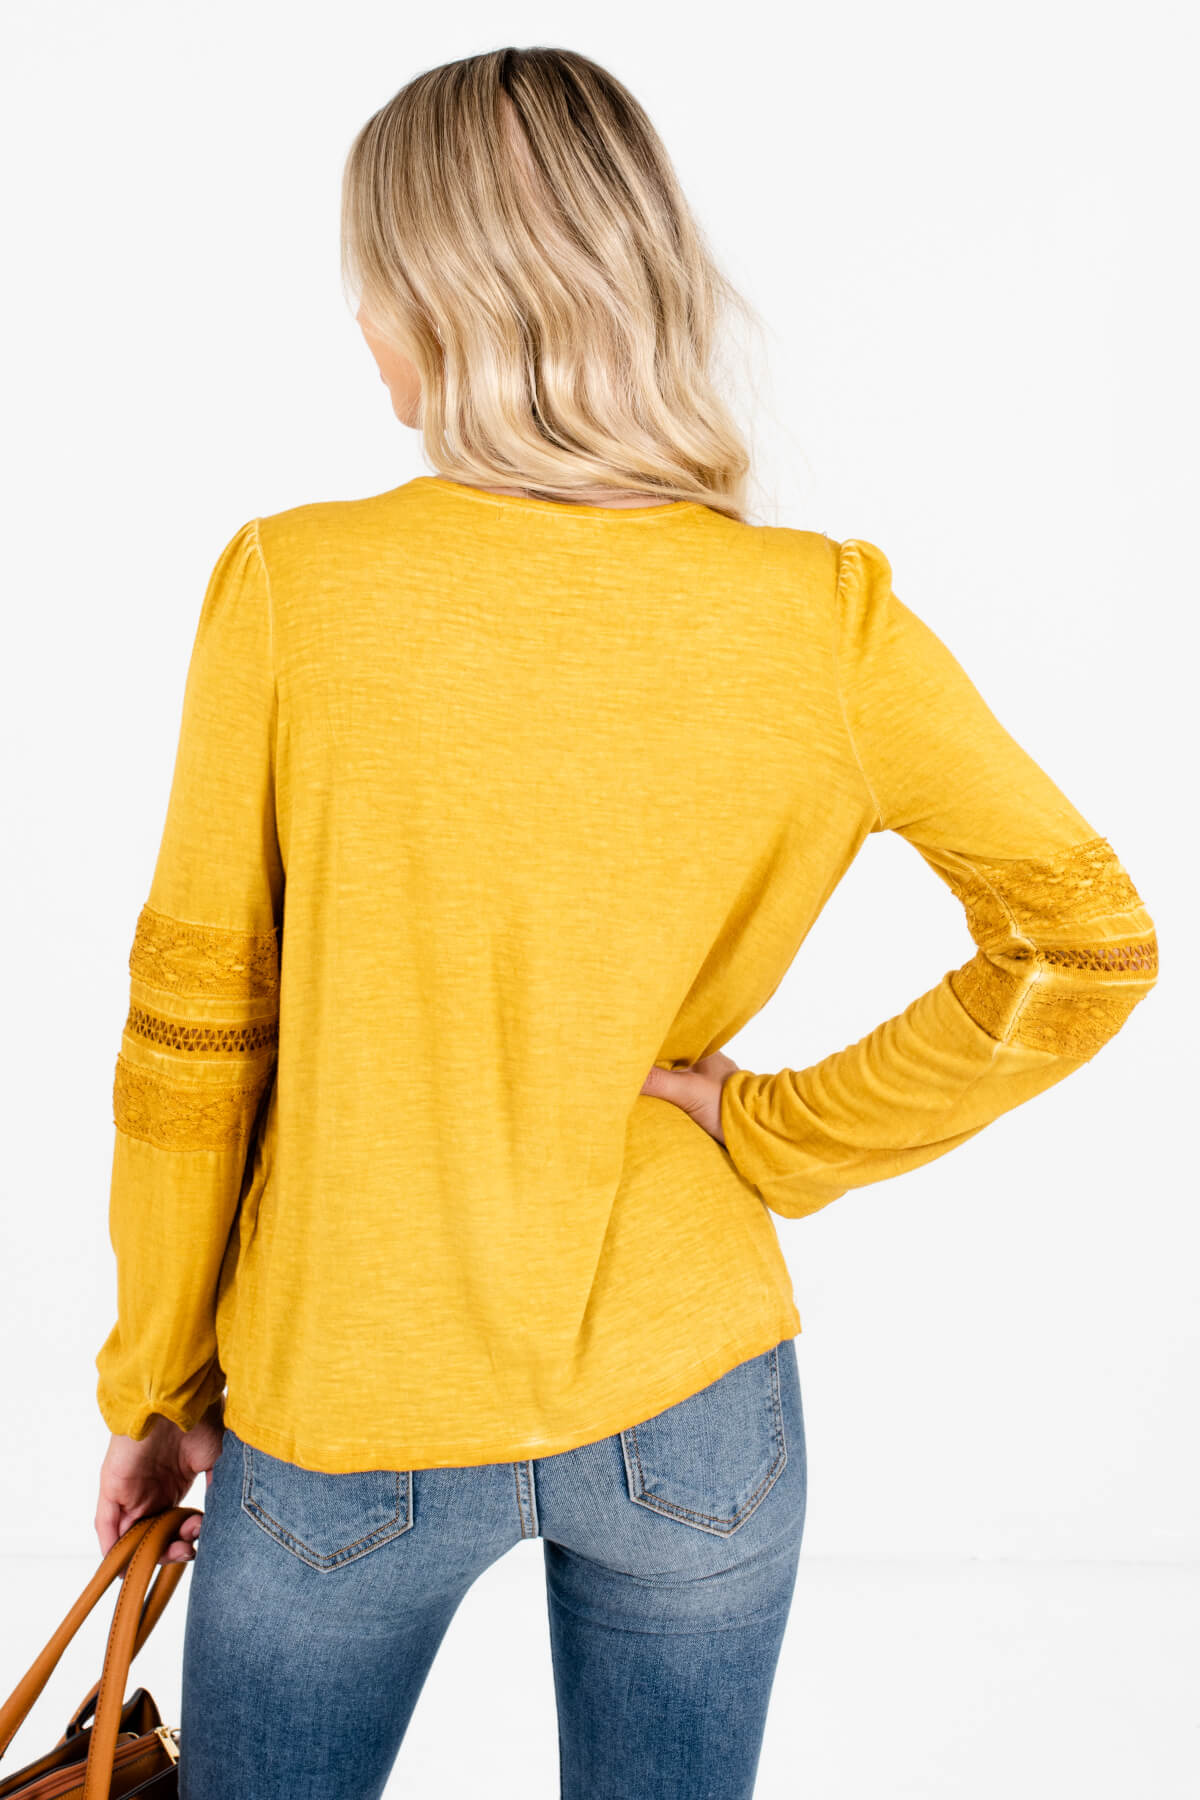 Women’s Mustard Yellow Long Sleeve Boutique Tops